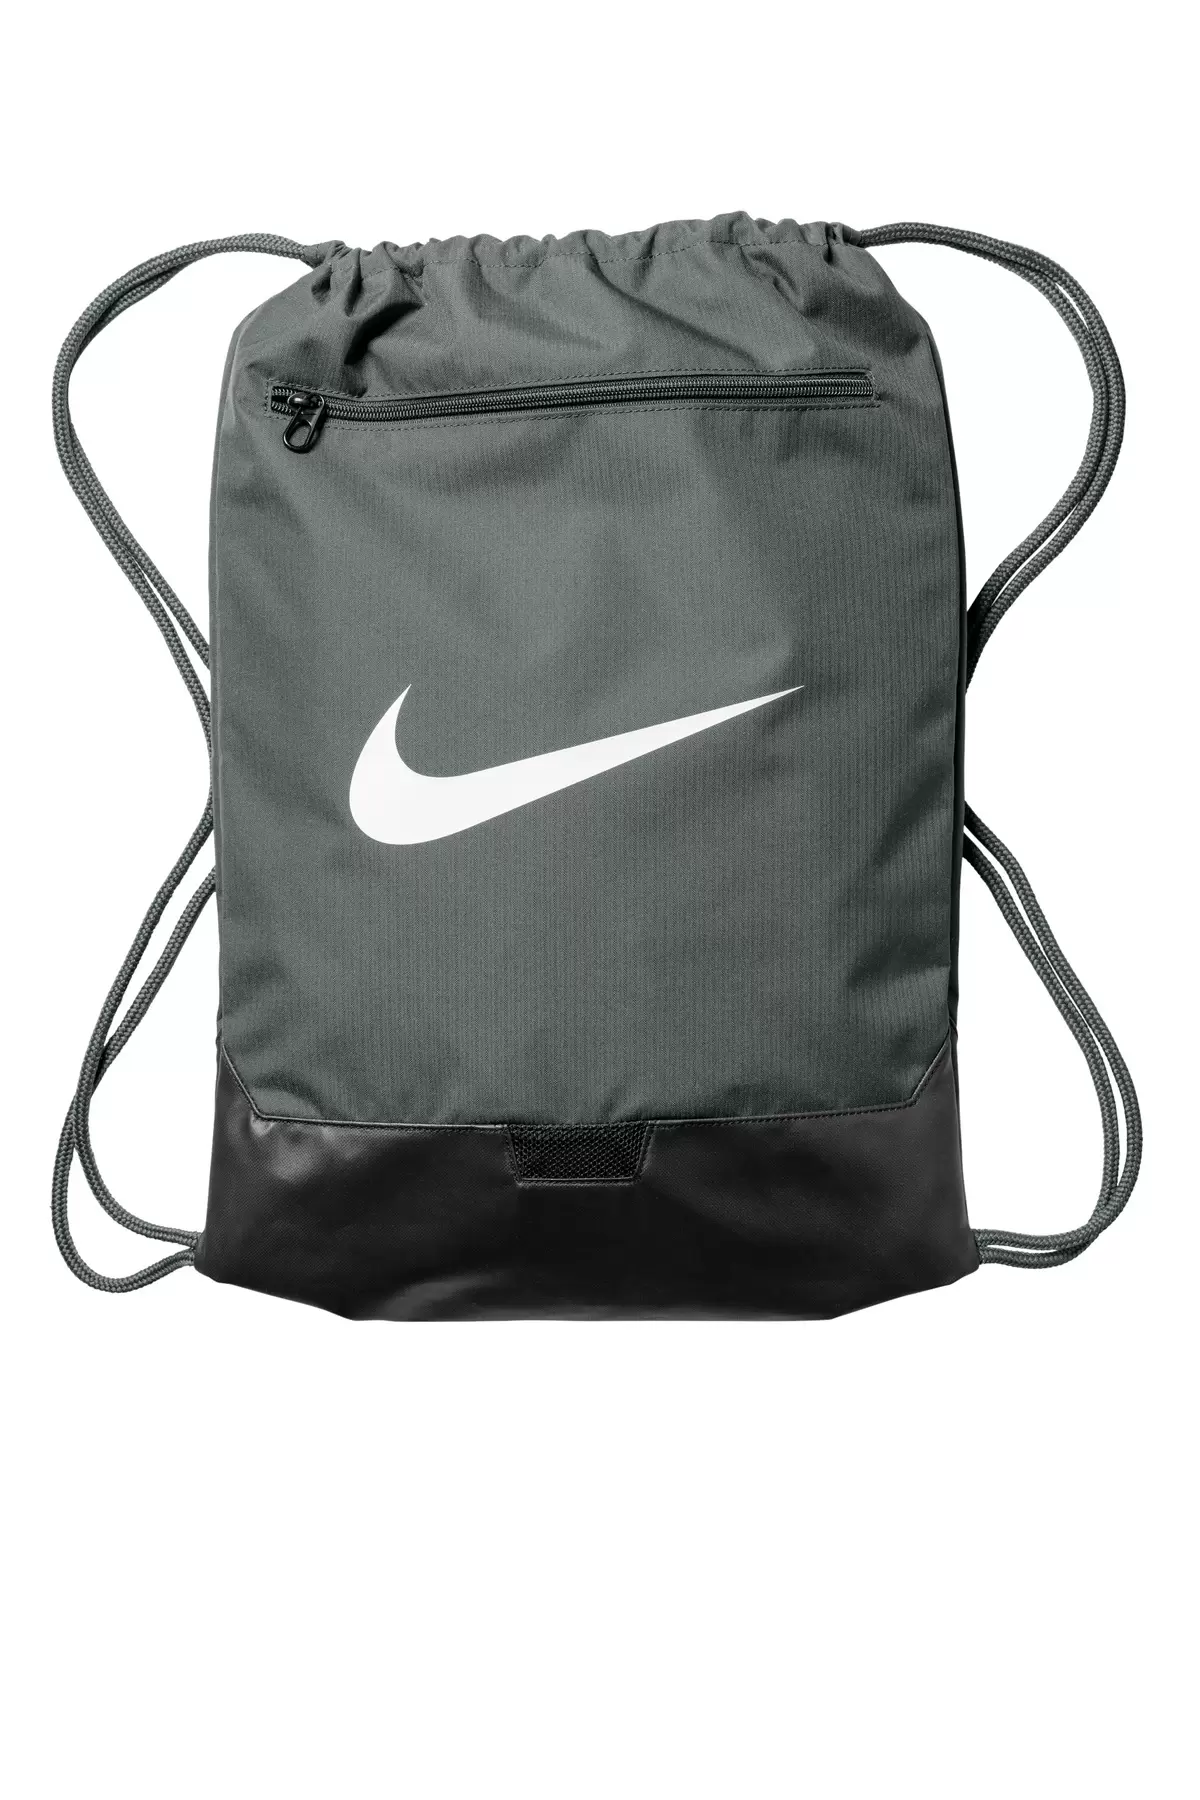 Nike NKDM3978 Brasilia Drawstring Pack - blankstyle.com